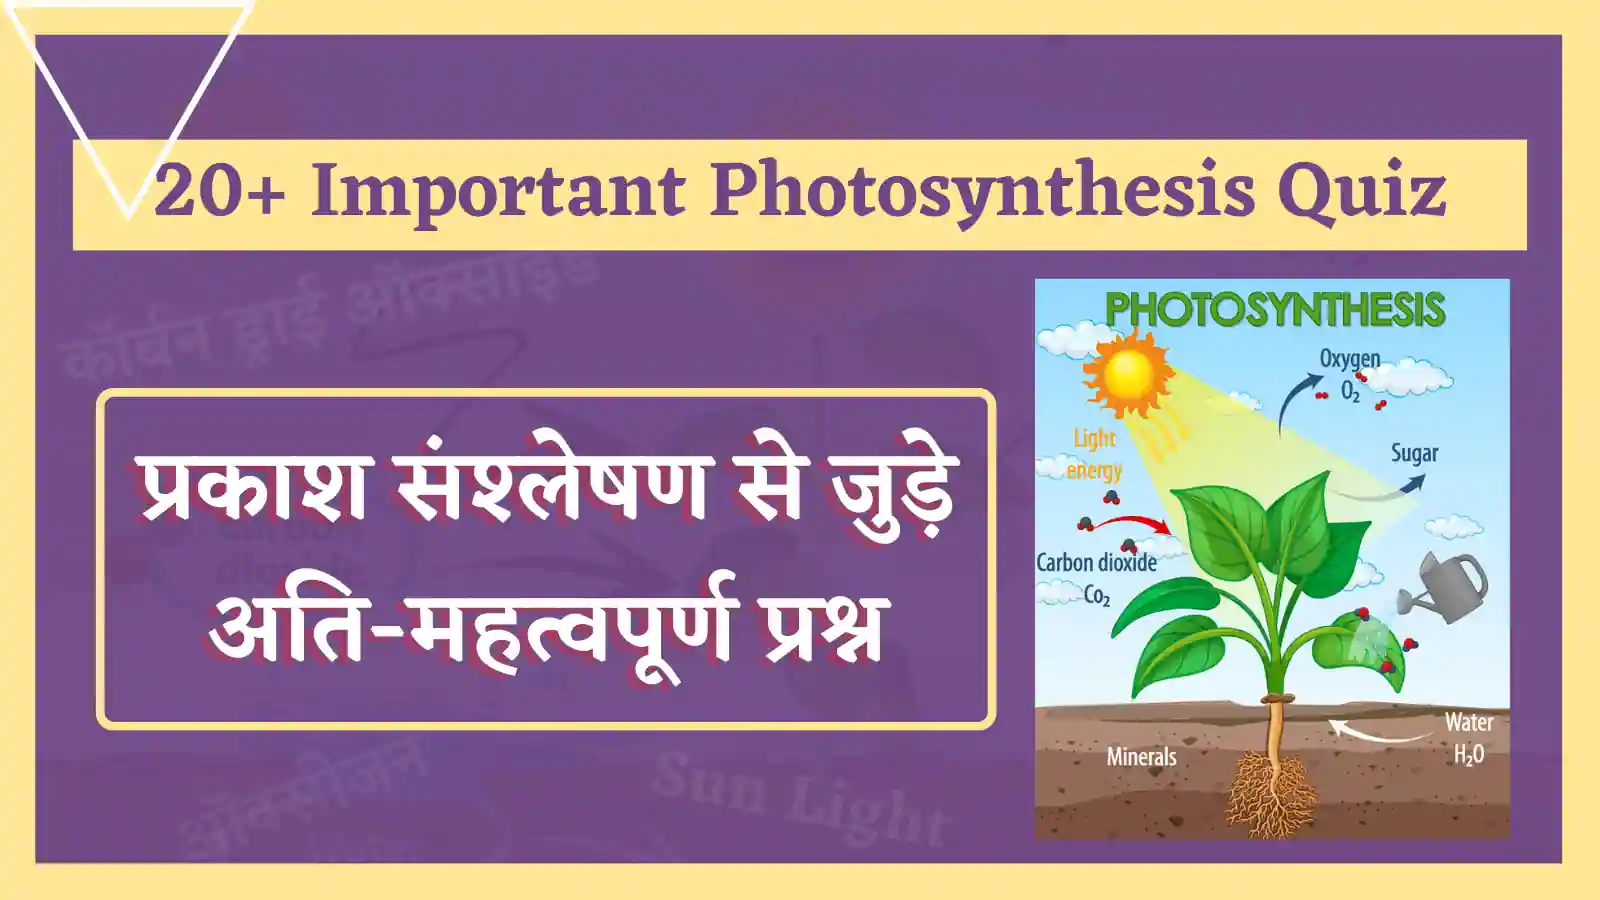 Photosynthesis Quiz in Hindi